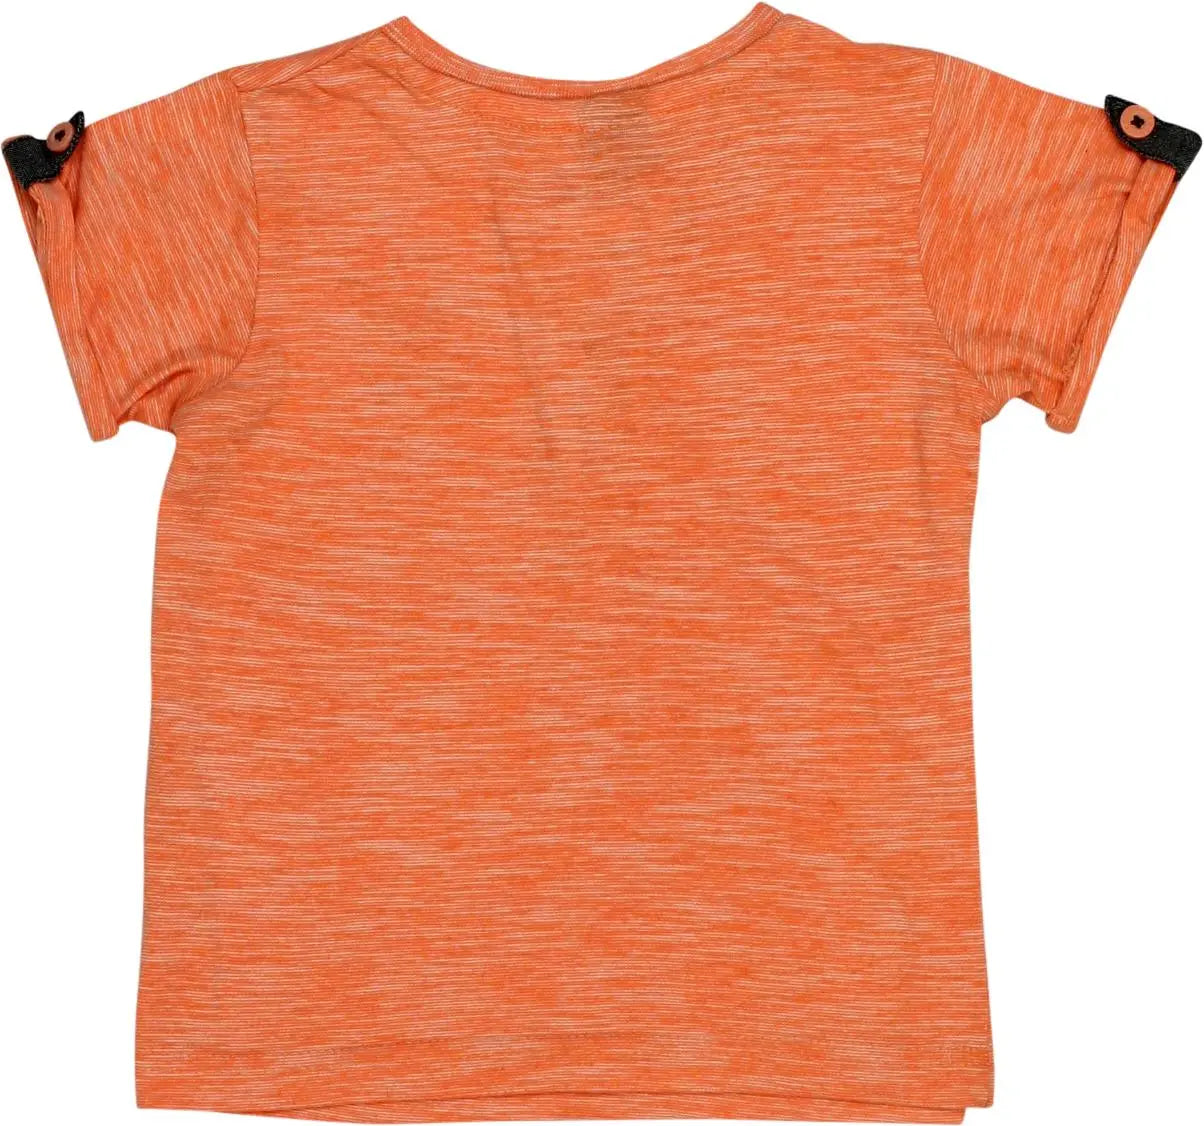 kiki & koko - Orange T-shirt- ThriftTale.com - Vintage and second handclothing